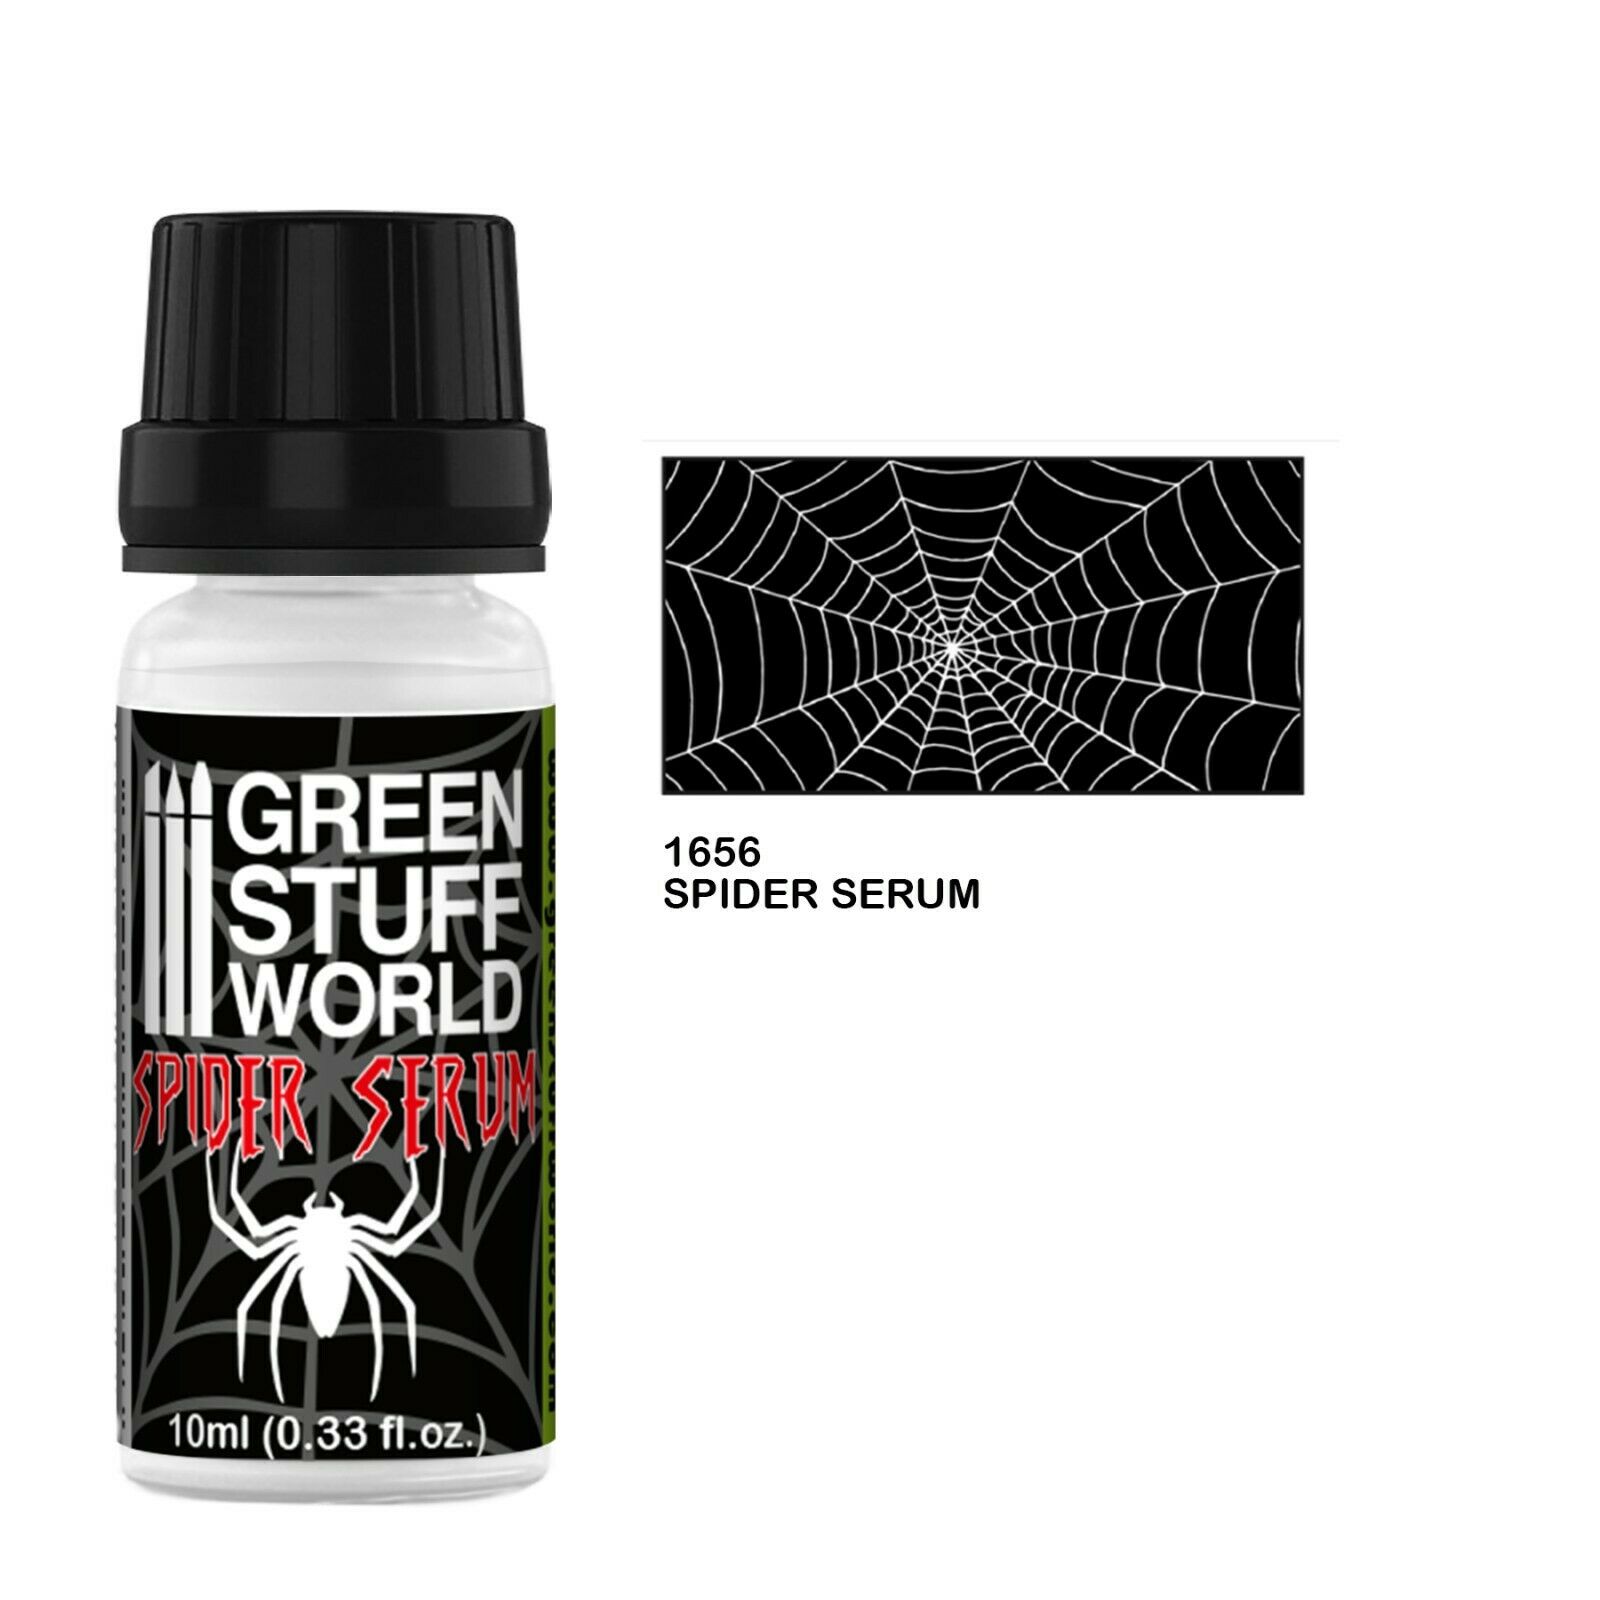 SPIDER SERUM 10 ml - plastic filaments spider web scenery dioramas airbrush